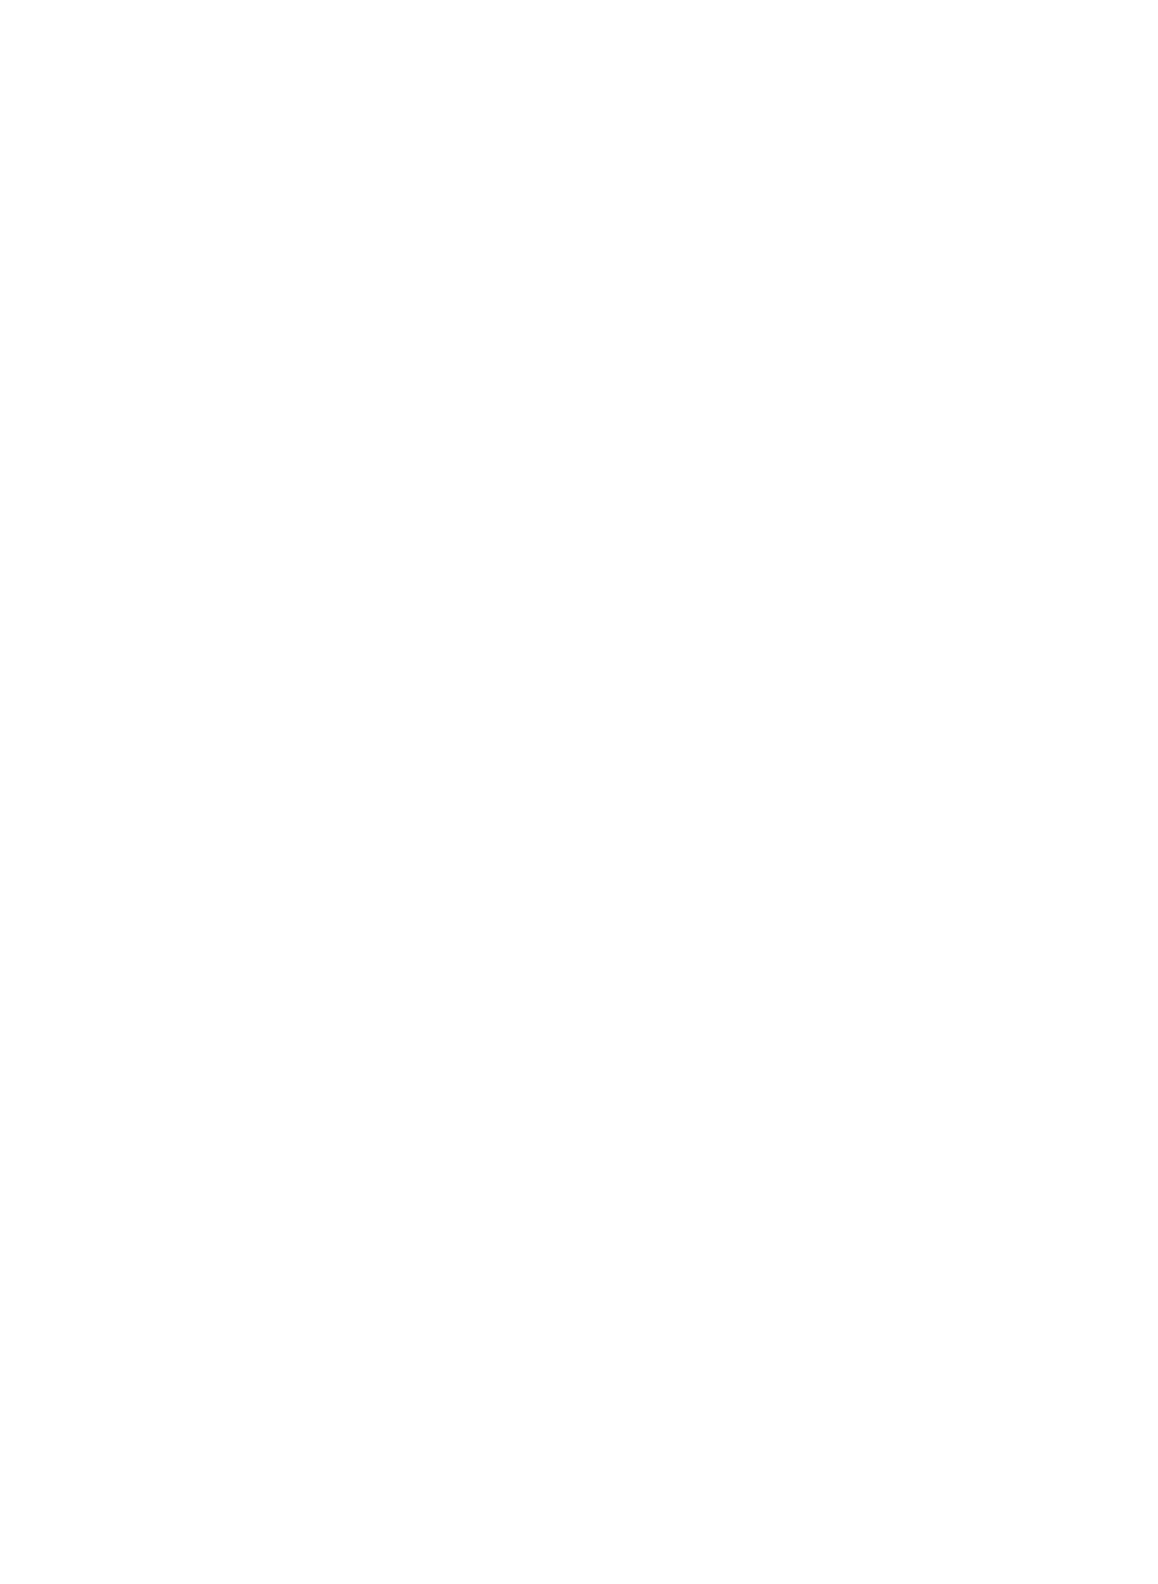 POSCO logo for dark backgrounds (transparent PNG)